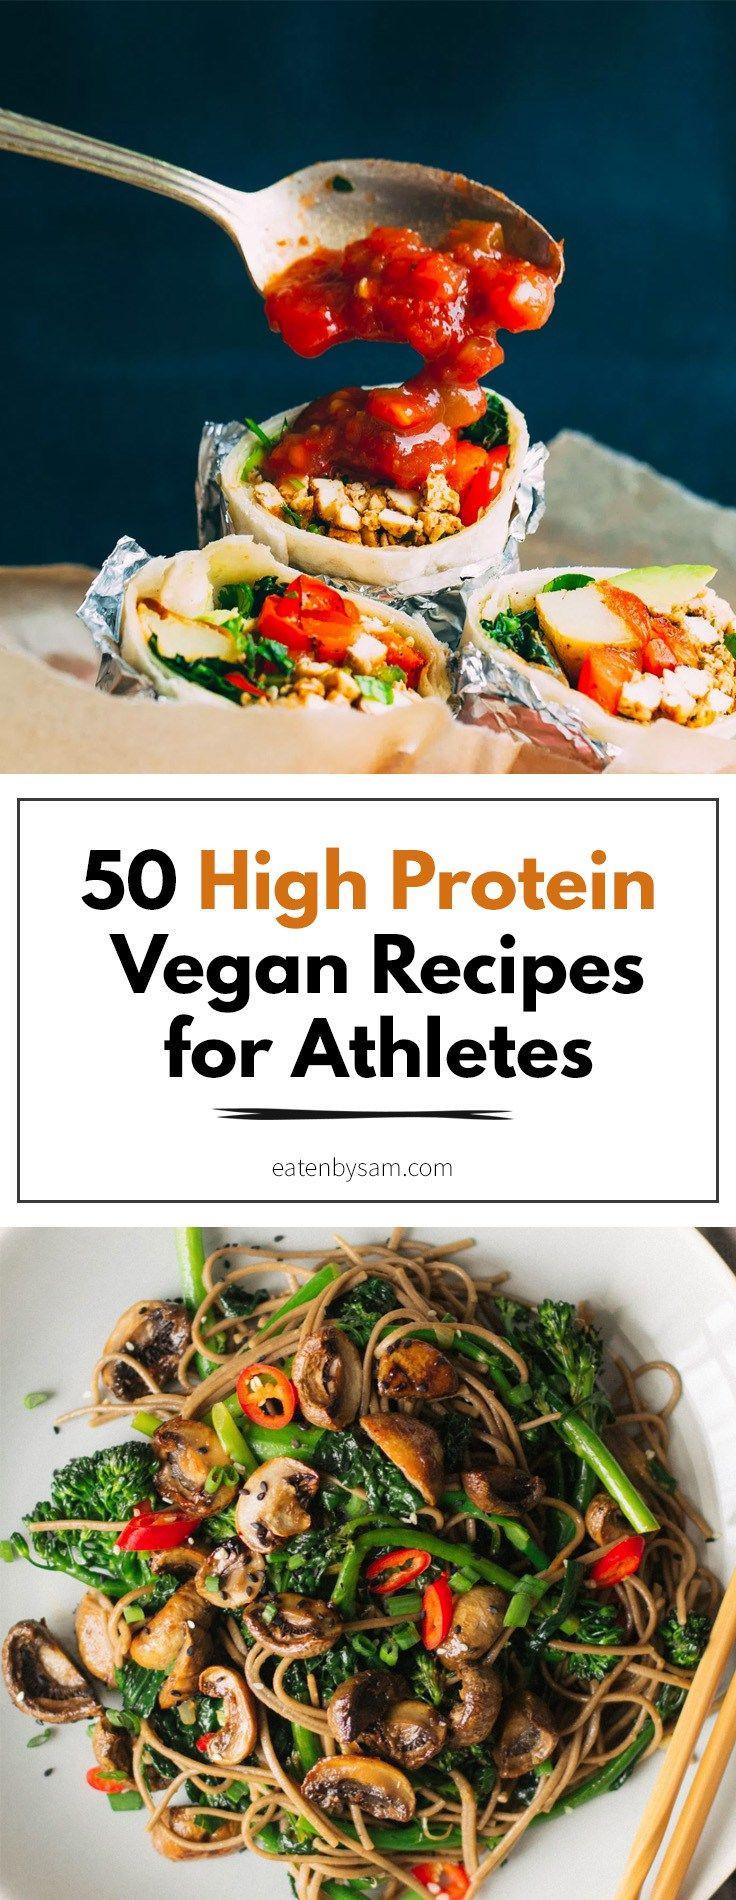 High Protein Vegetarian Foods
 The 25 best Vegan recipes ideas on Pinterest